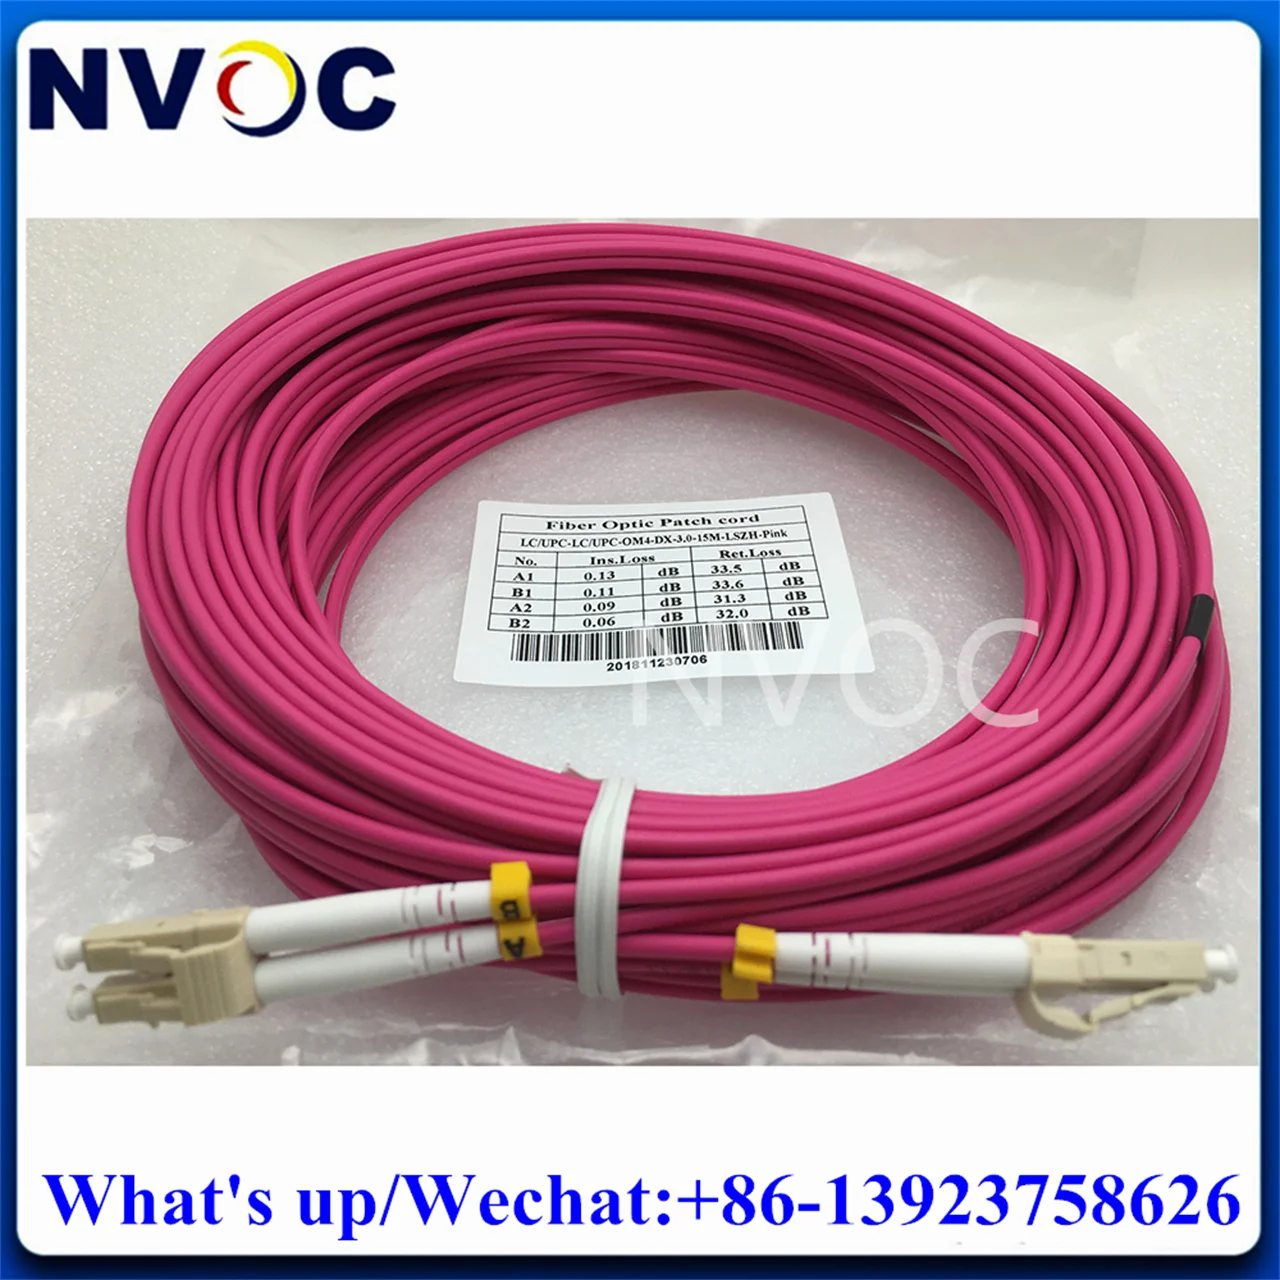 

50M LC-LC/ST/SC/FC Multi-Mode OM3 Channel Cable Duplex OM4,DX,3.0mm,LSZH Pink Jacket,Fiber Optic Patch Cord,LC UPC Fibre Jumper